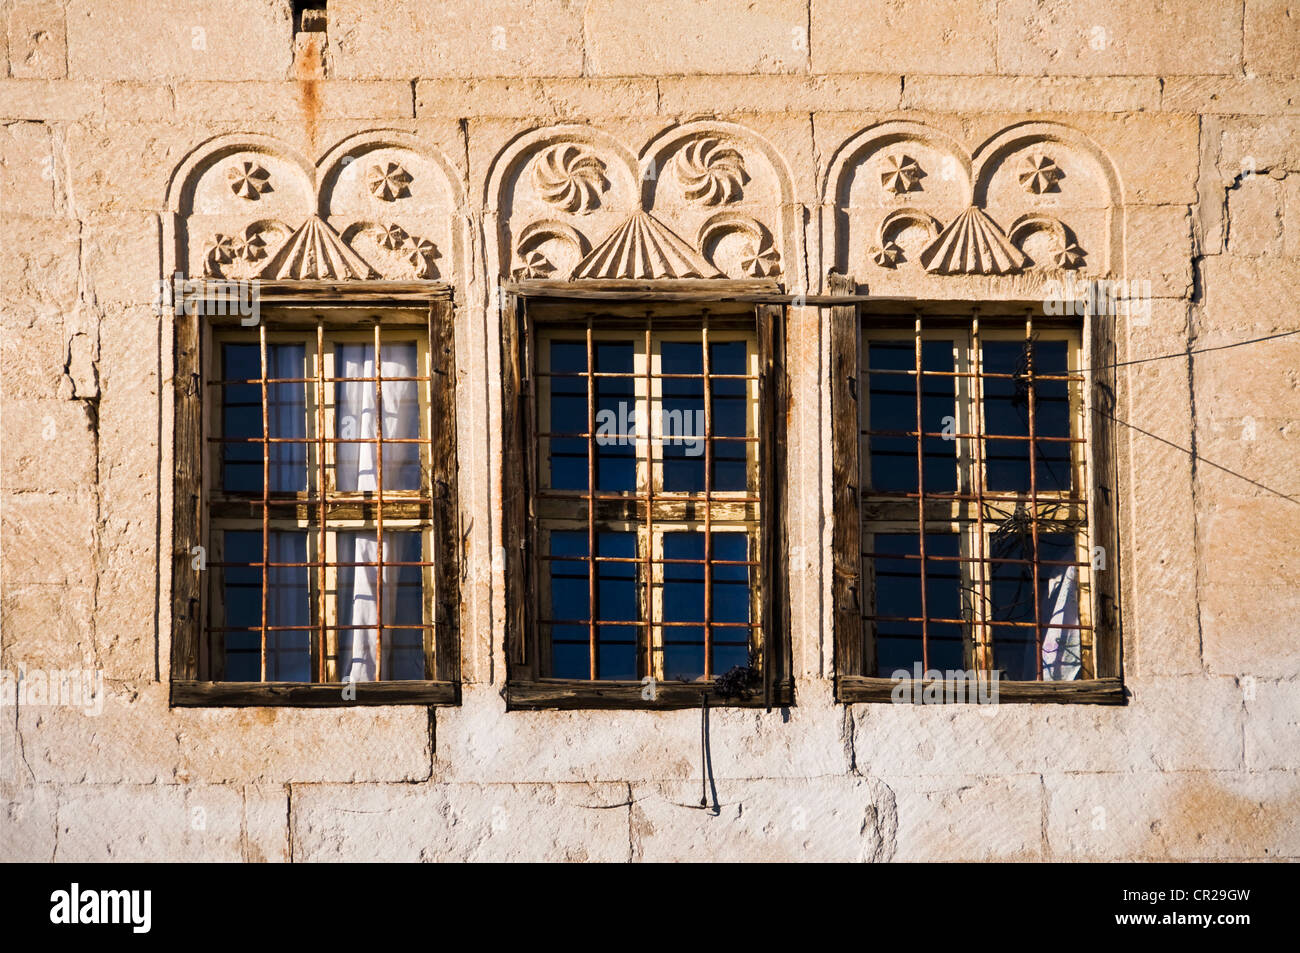 Drei orientalische Fenster - Ürgüp, Cappadocia - Türkei Stockfoto